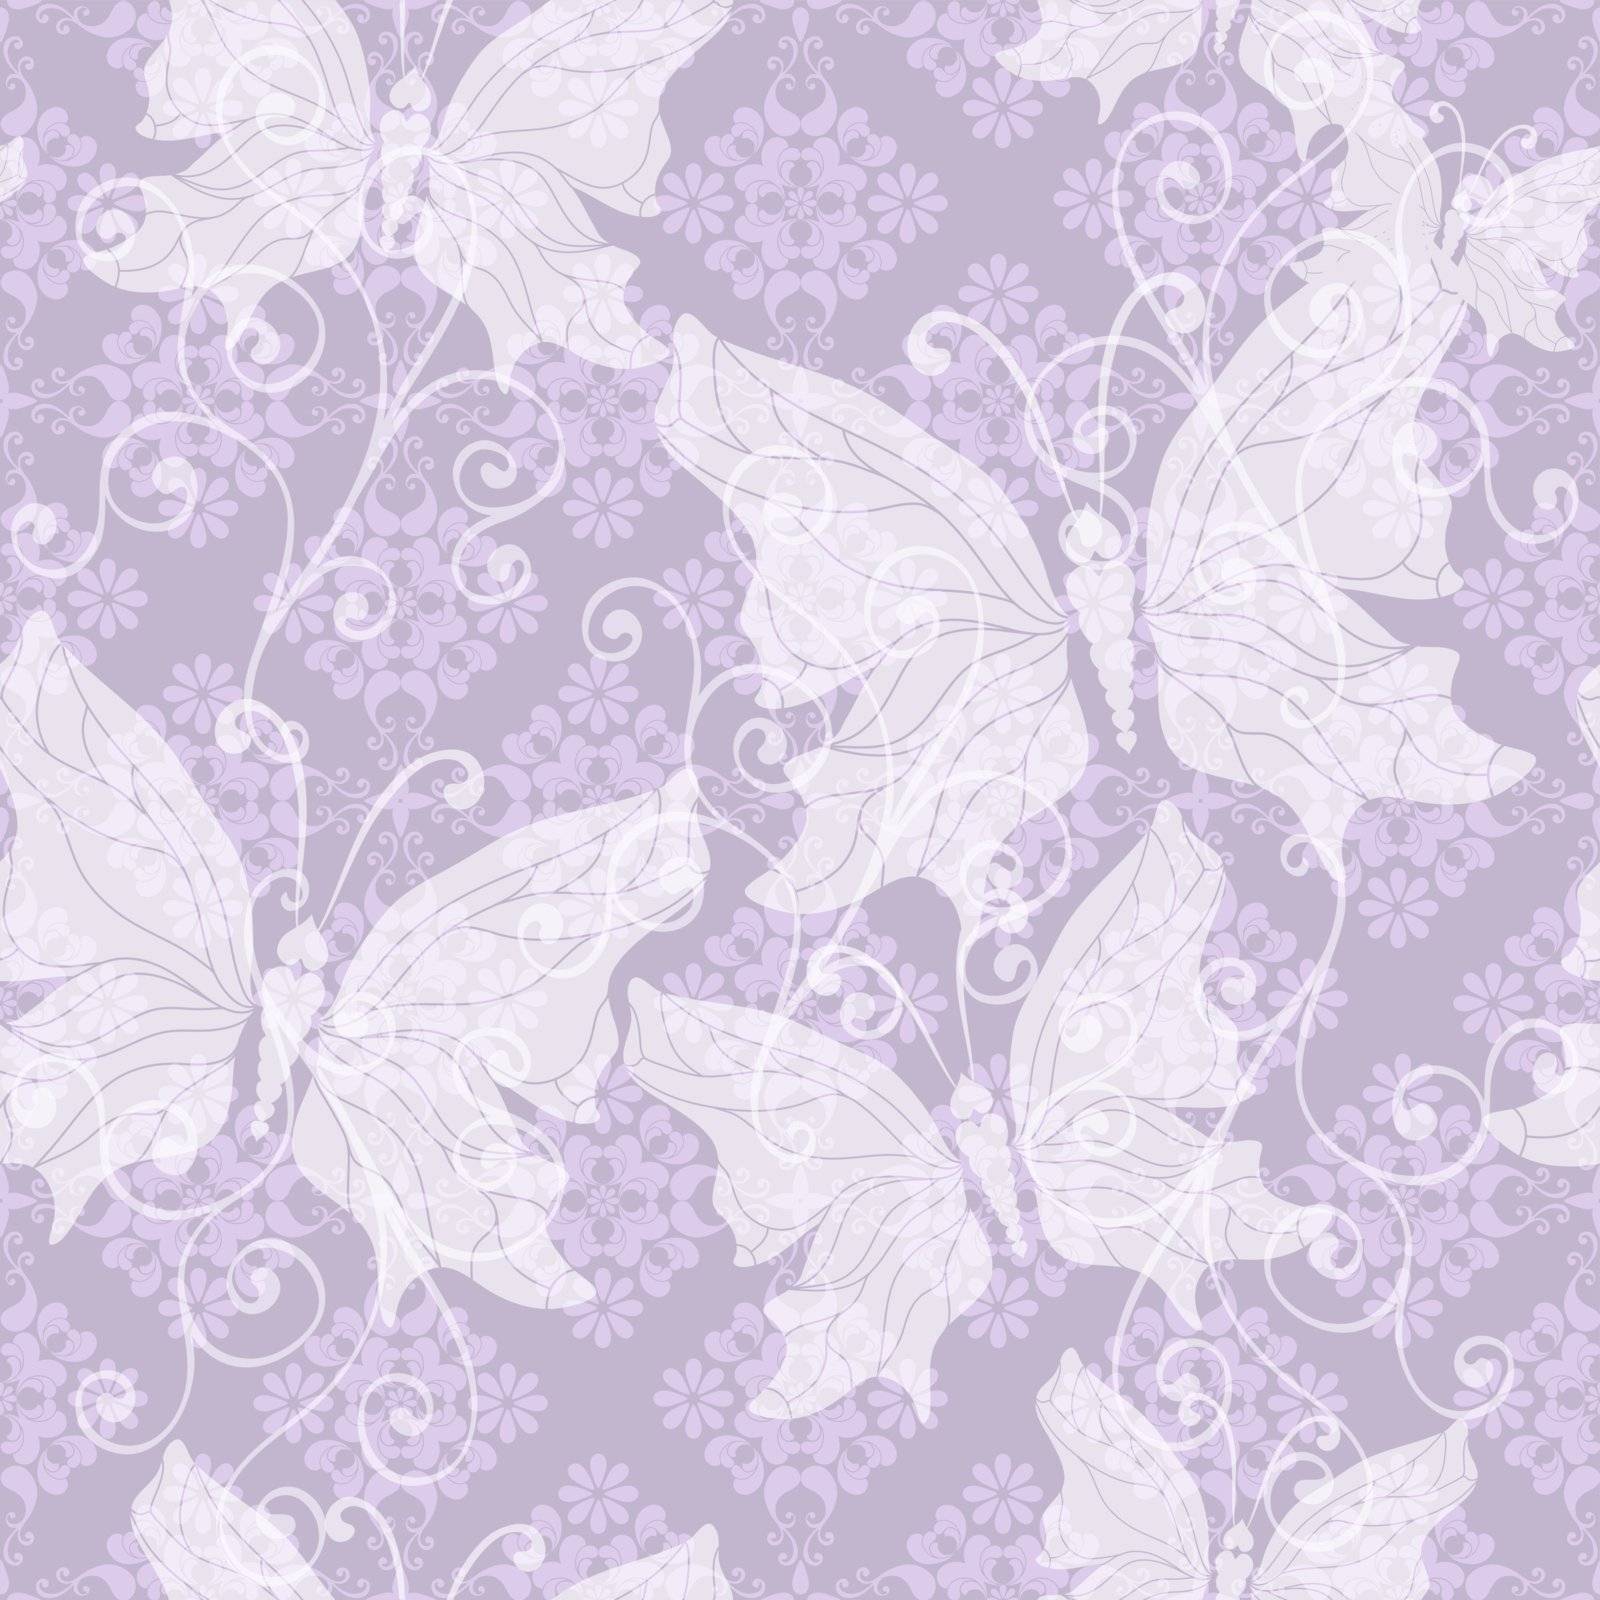 Gentle floral pattern by OlgaDrozd